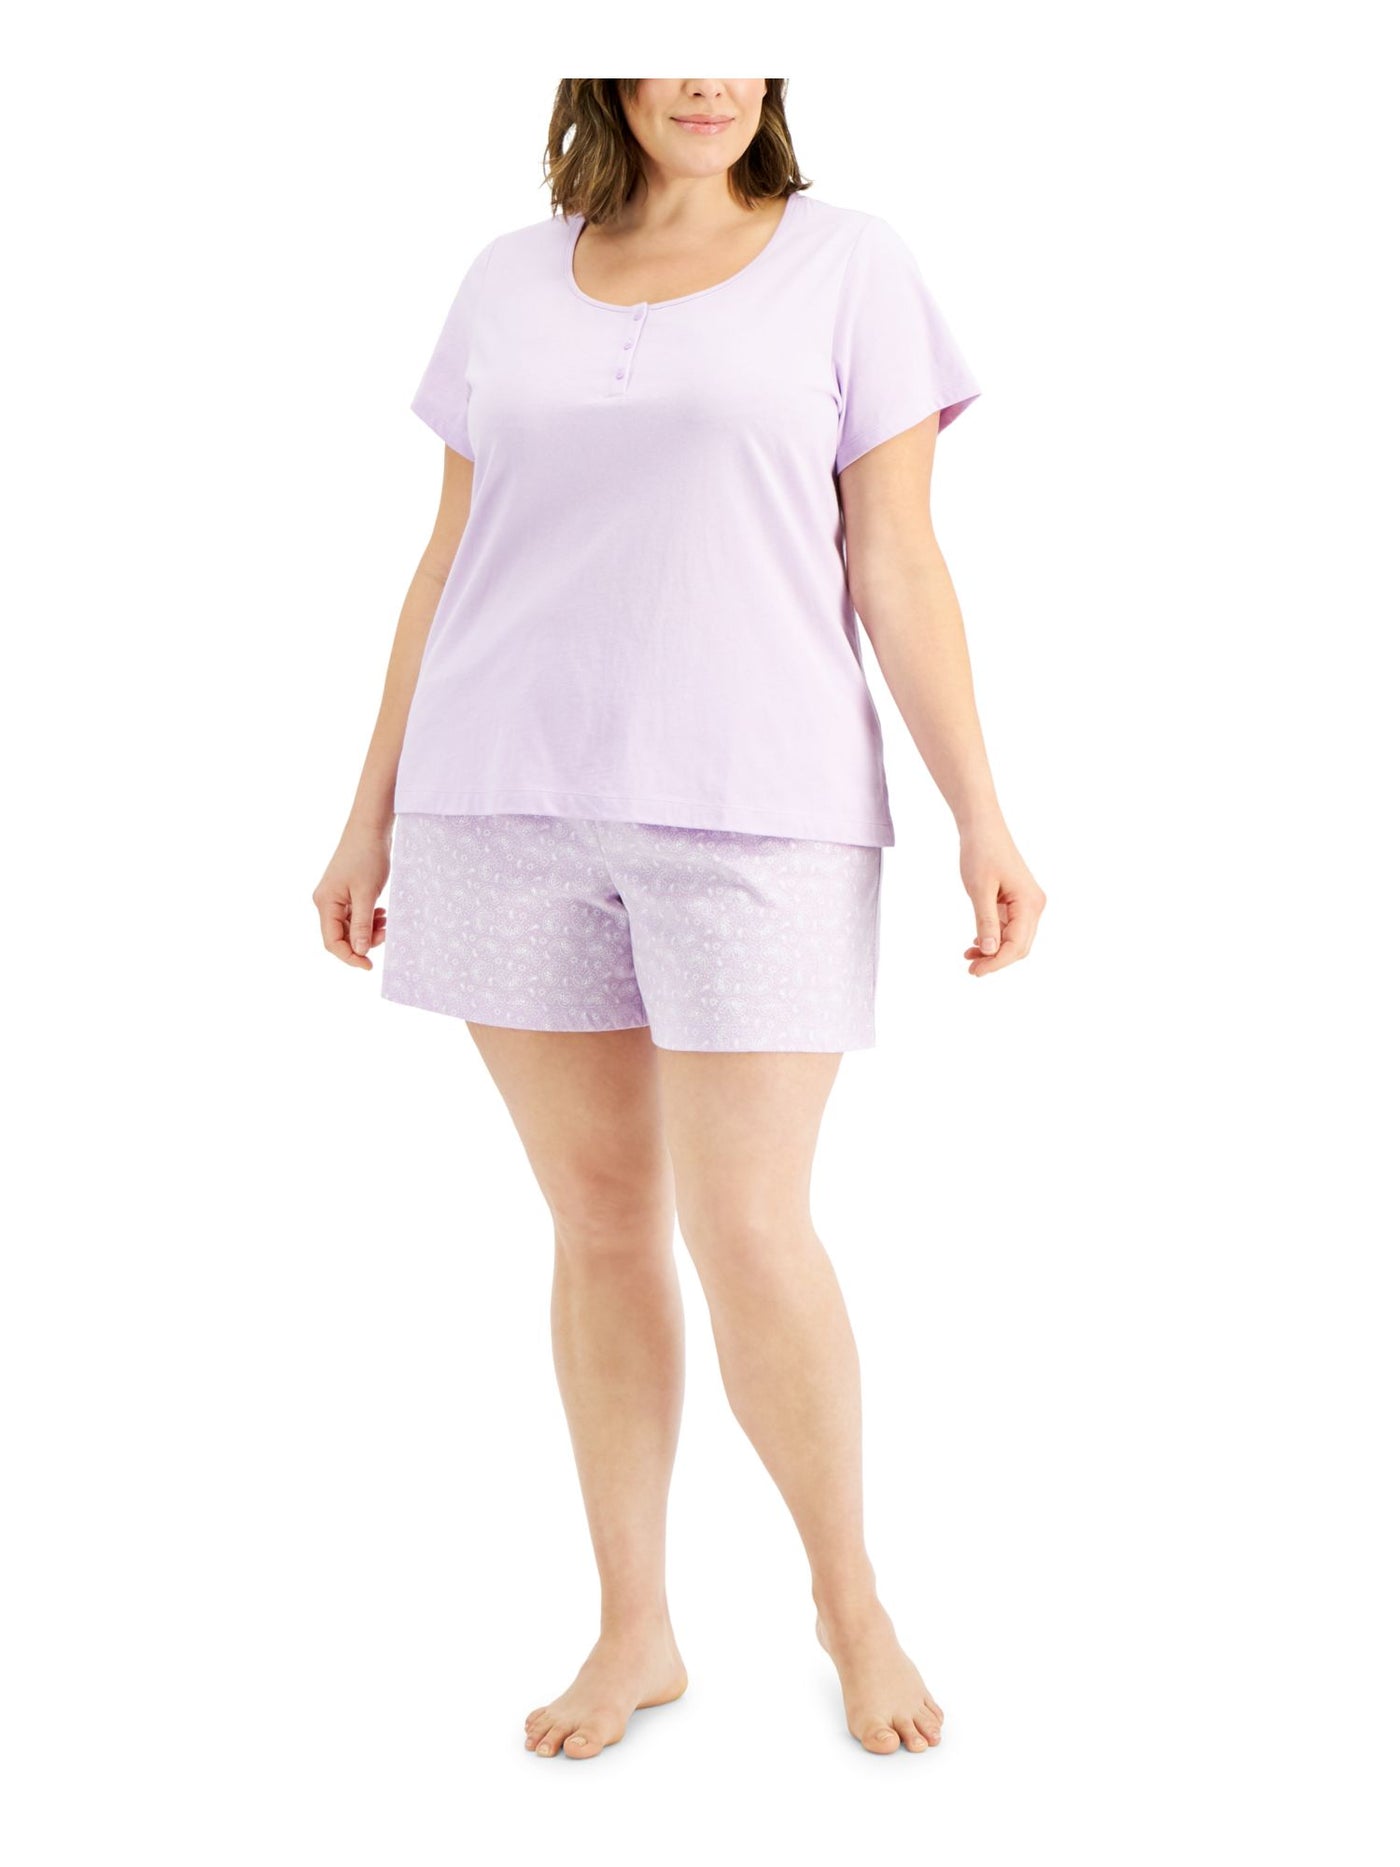 CHARTER CLUB Womens Purple Elastic Band Short Sleeve Henley Top Shorts Pants Pajamas XL